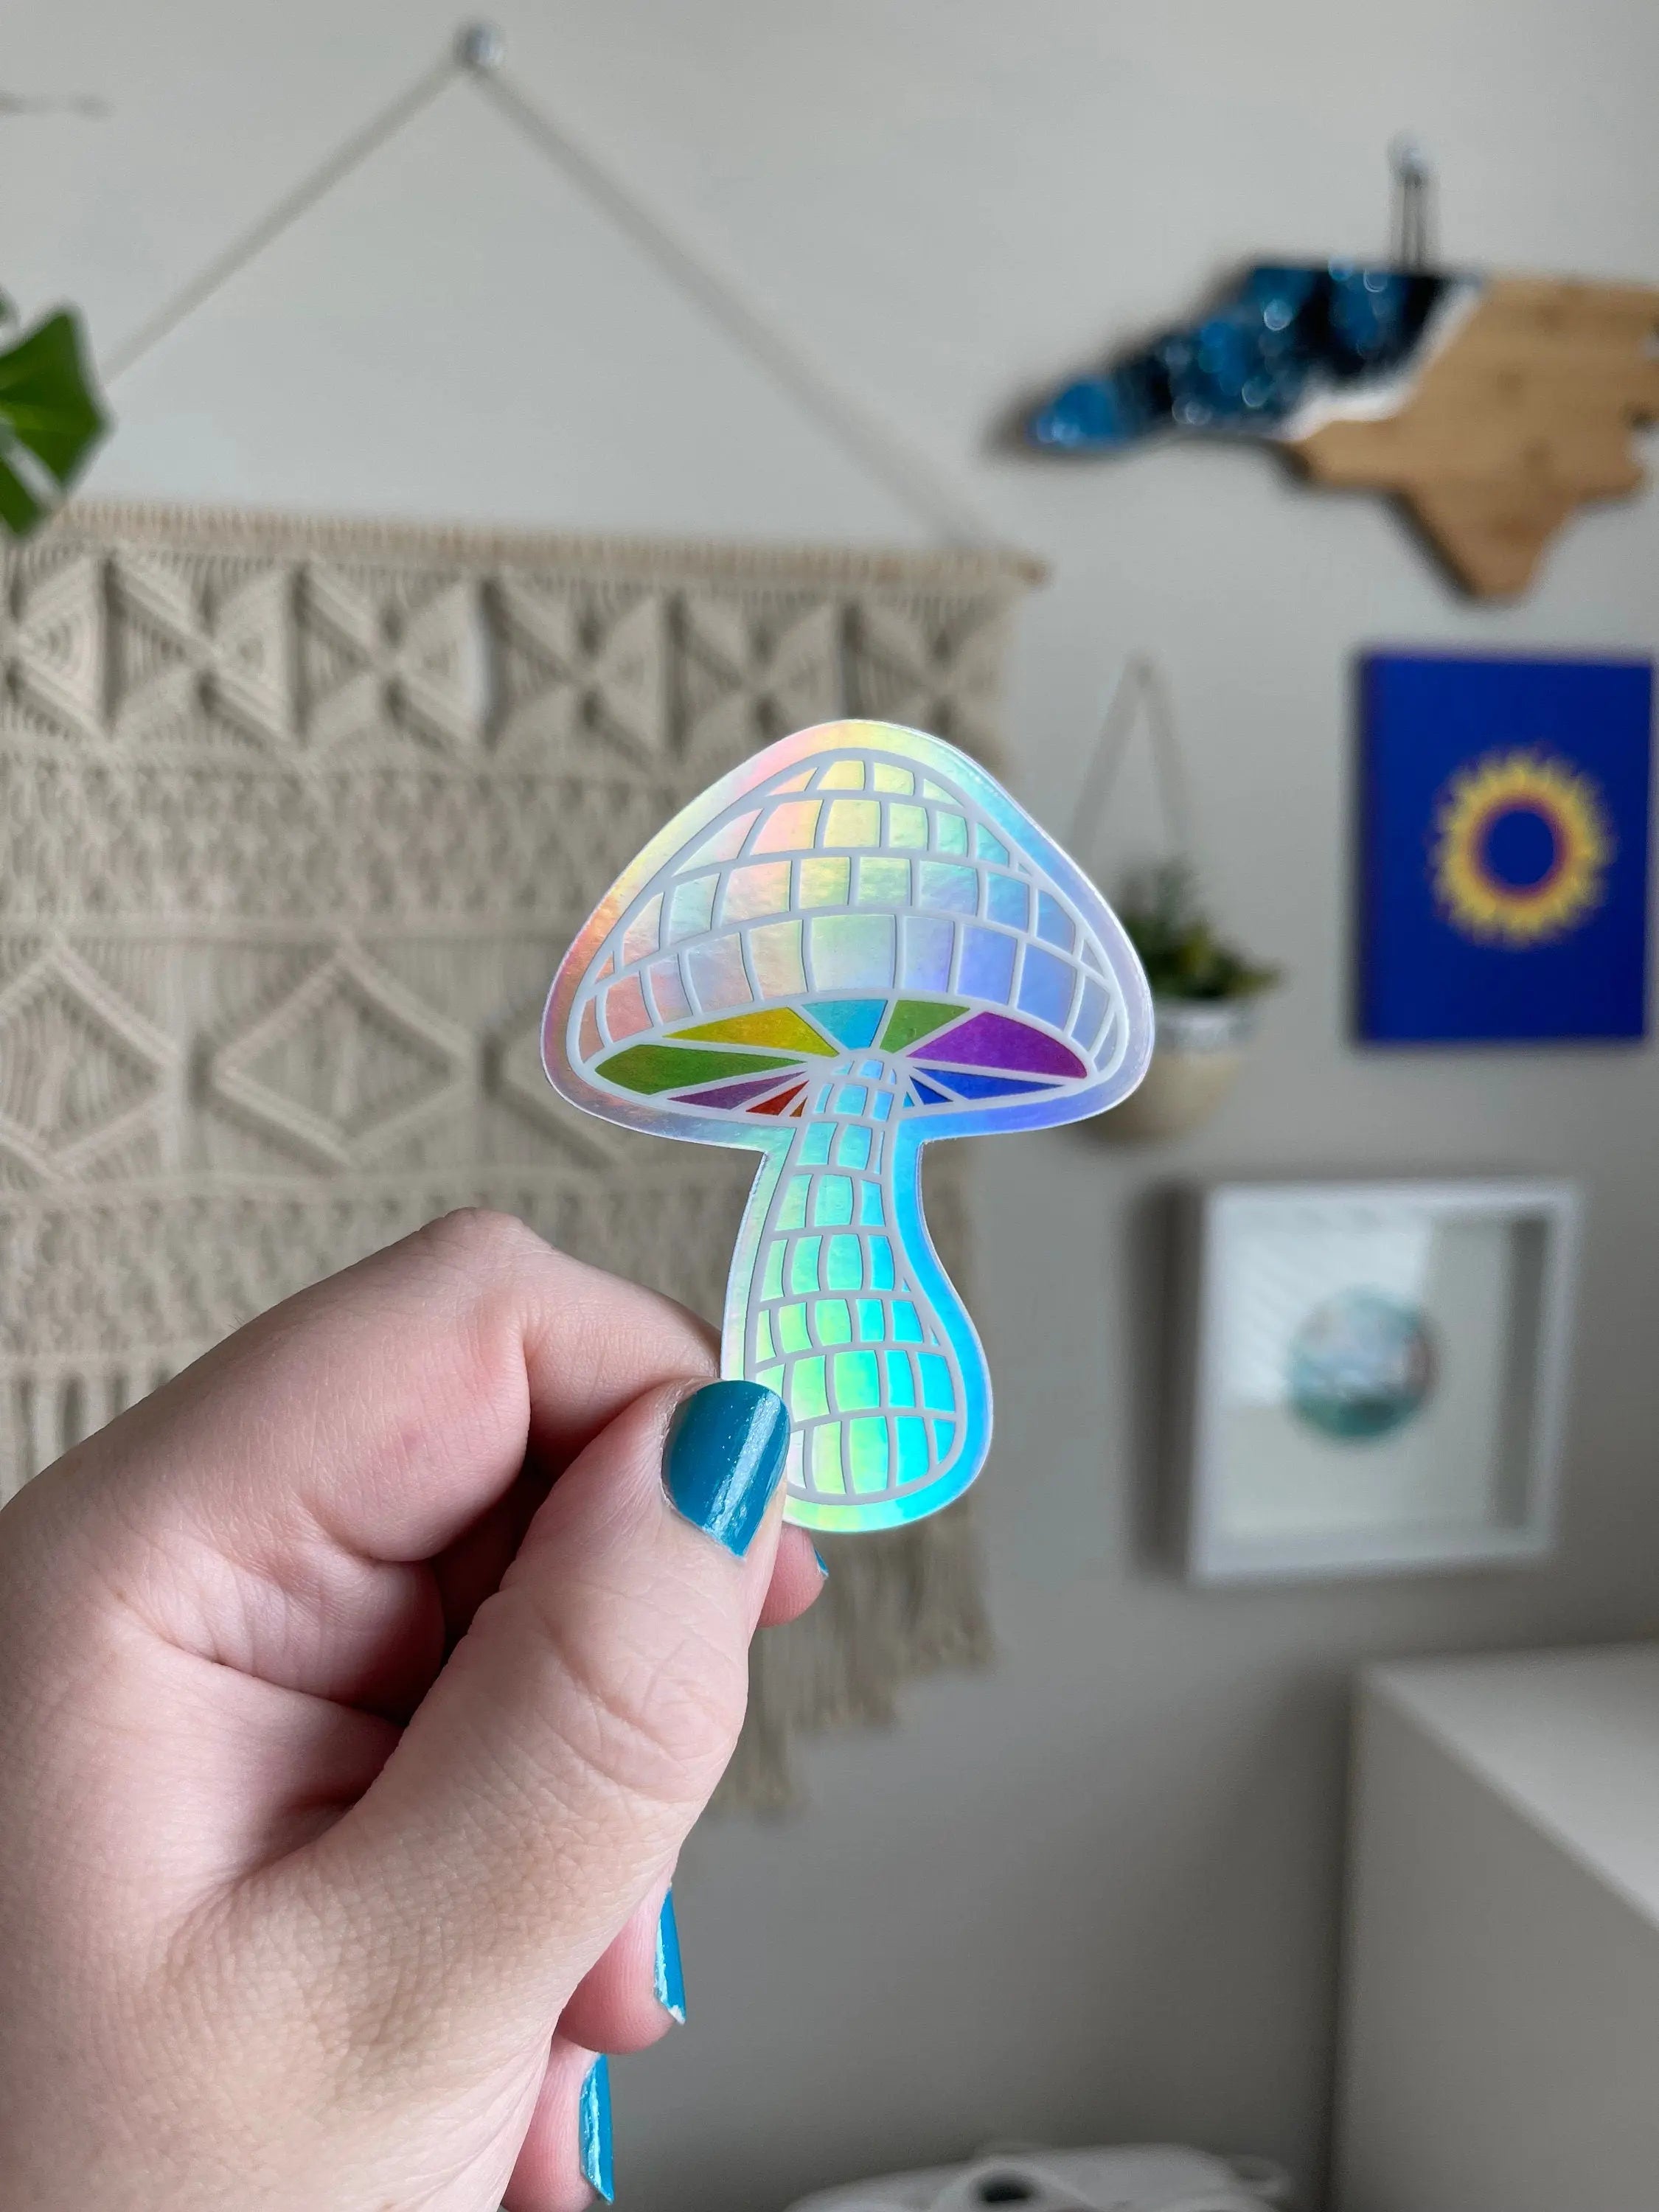 Holographic disco ball mushroom sticker MangoIllustrated